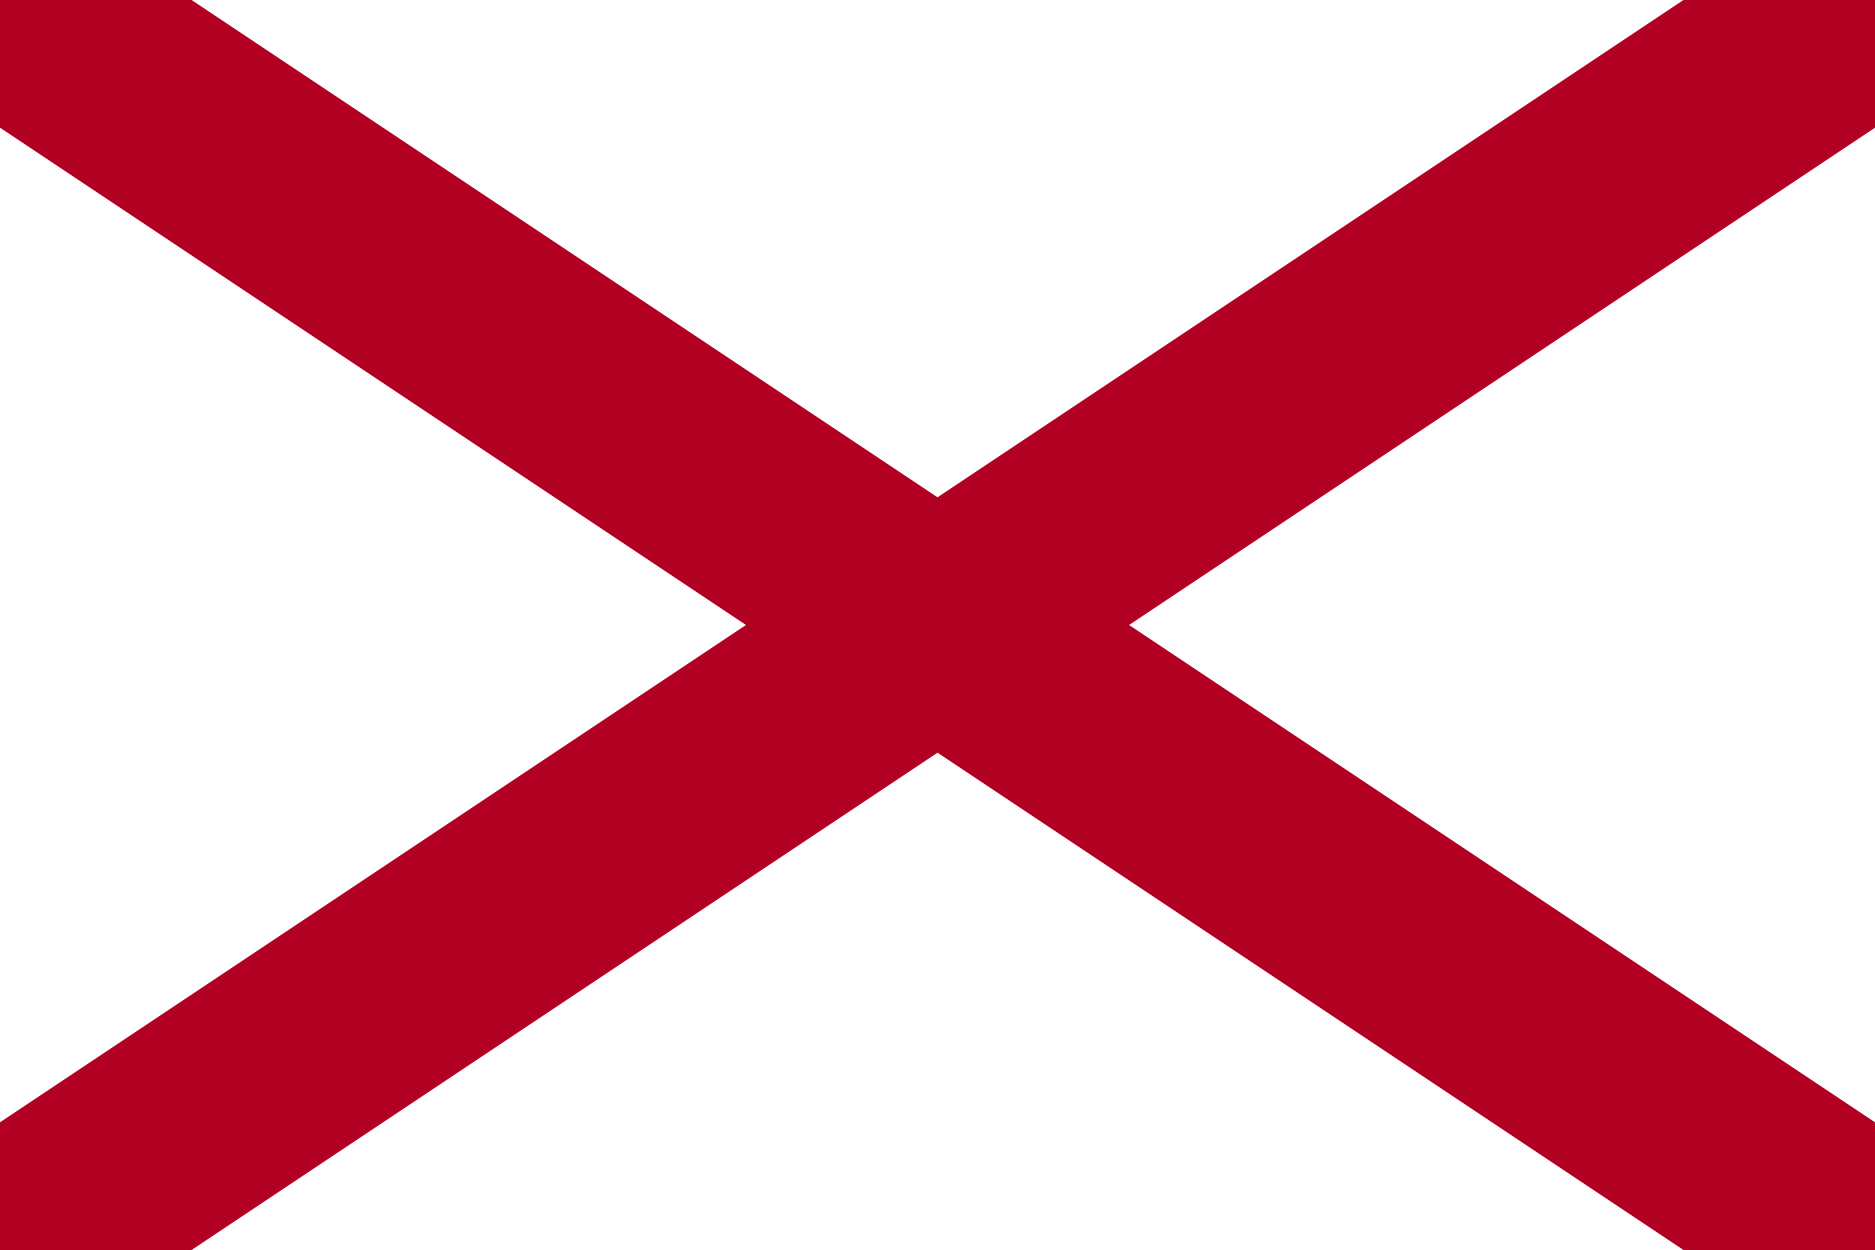 Free Alabama Flag Images: AI, EPS, GIF, JPG, PDF, PNG, SVG and more!